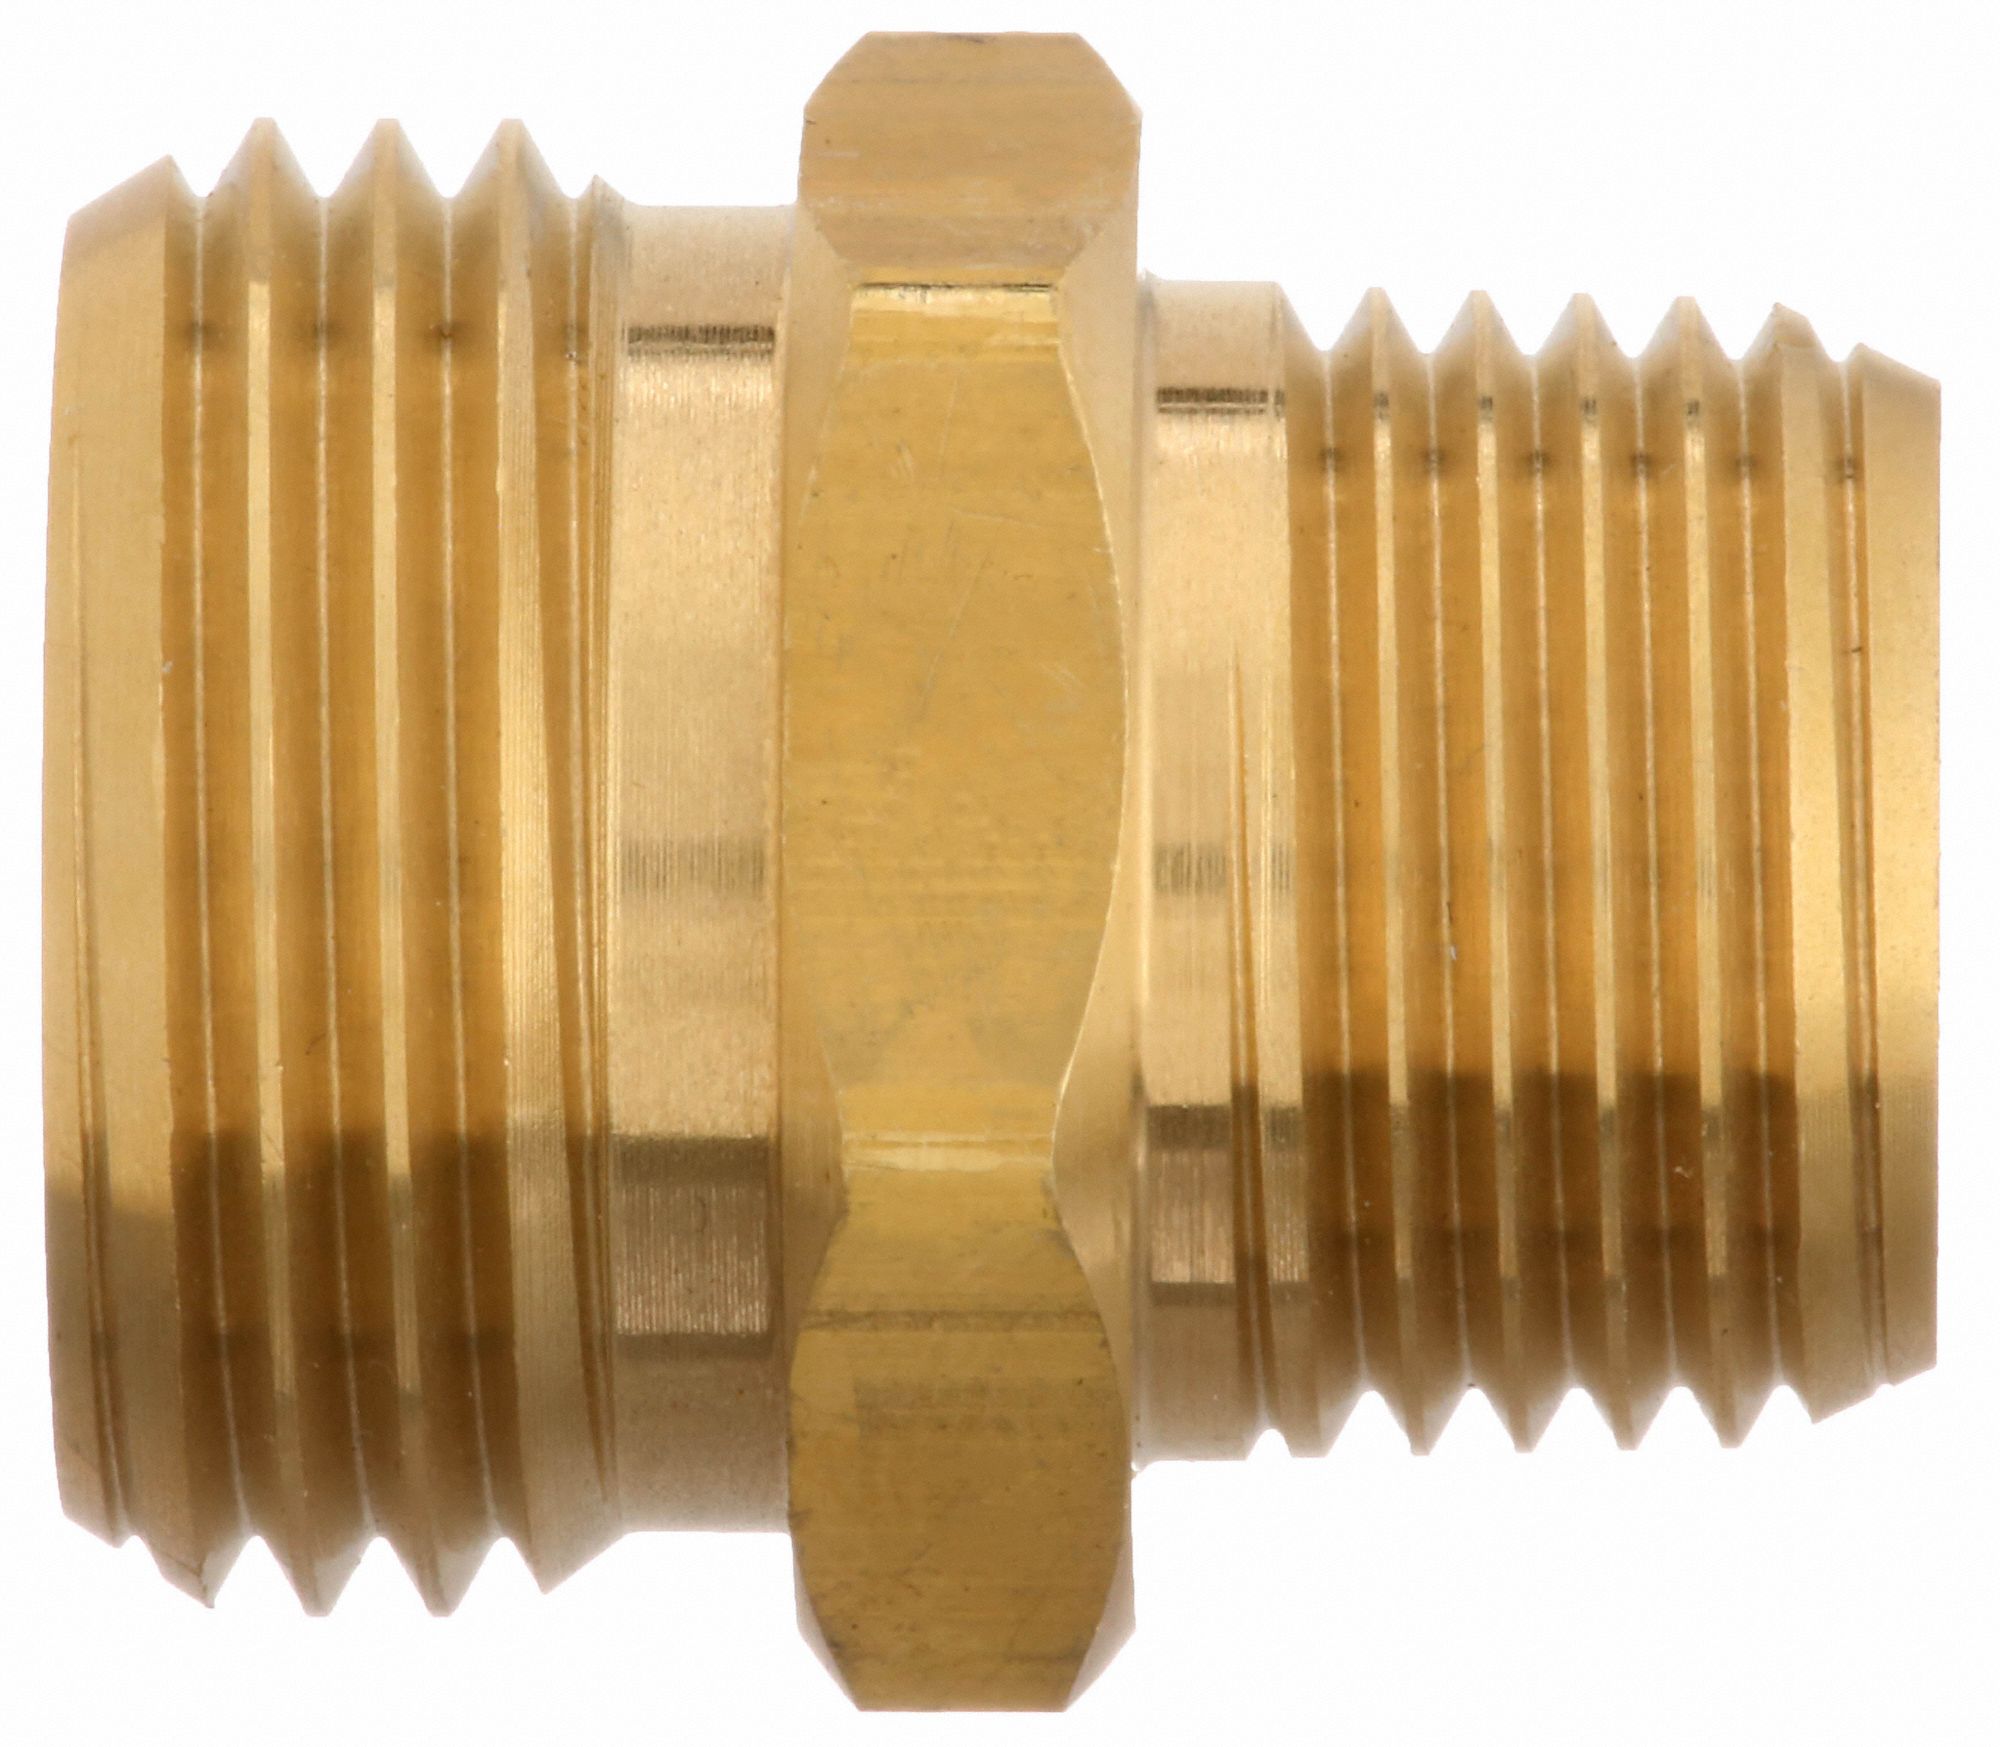 Westward Garden Hose Adapter Fitting Material Brass X Brass Fitting Size 1 2 In X 3 4 In 1p654 1p654 Grainger